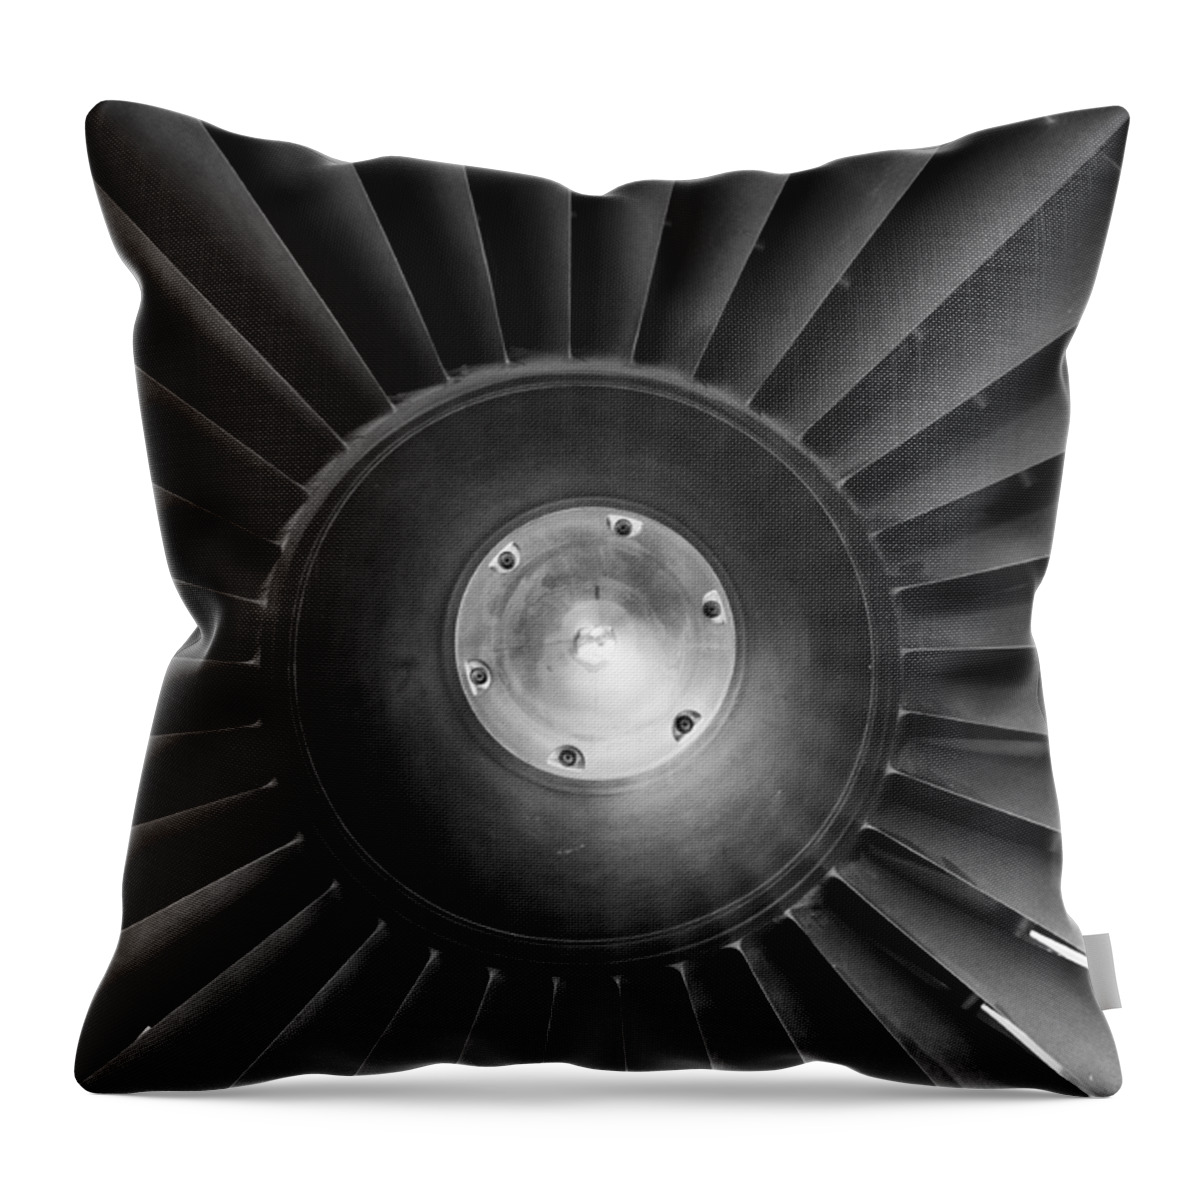 Aeronautics Throw Pillow featuring the photograph Turbo by Christi Kraft